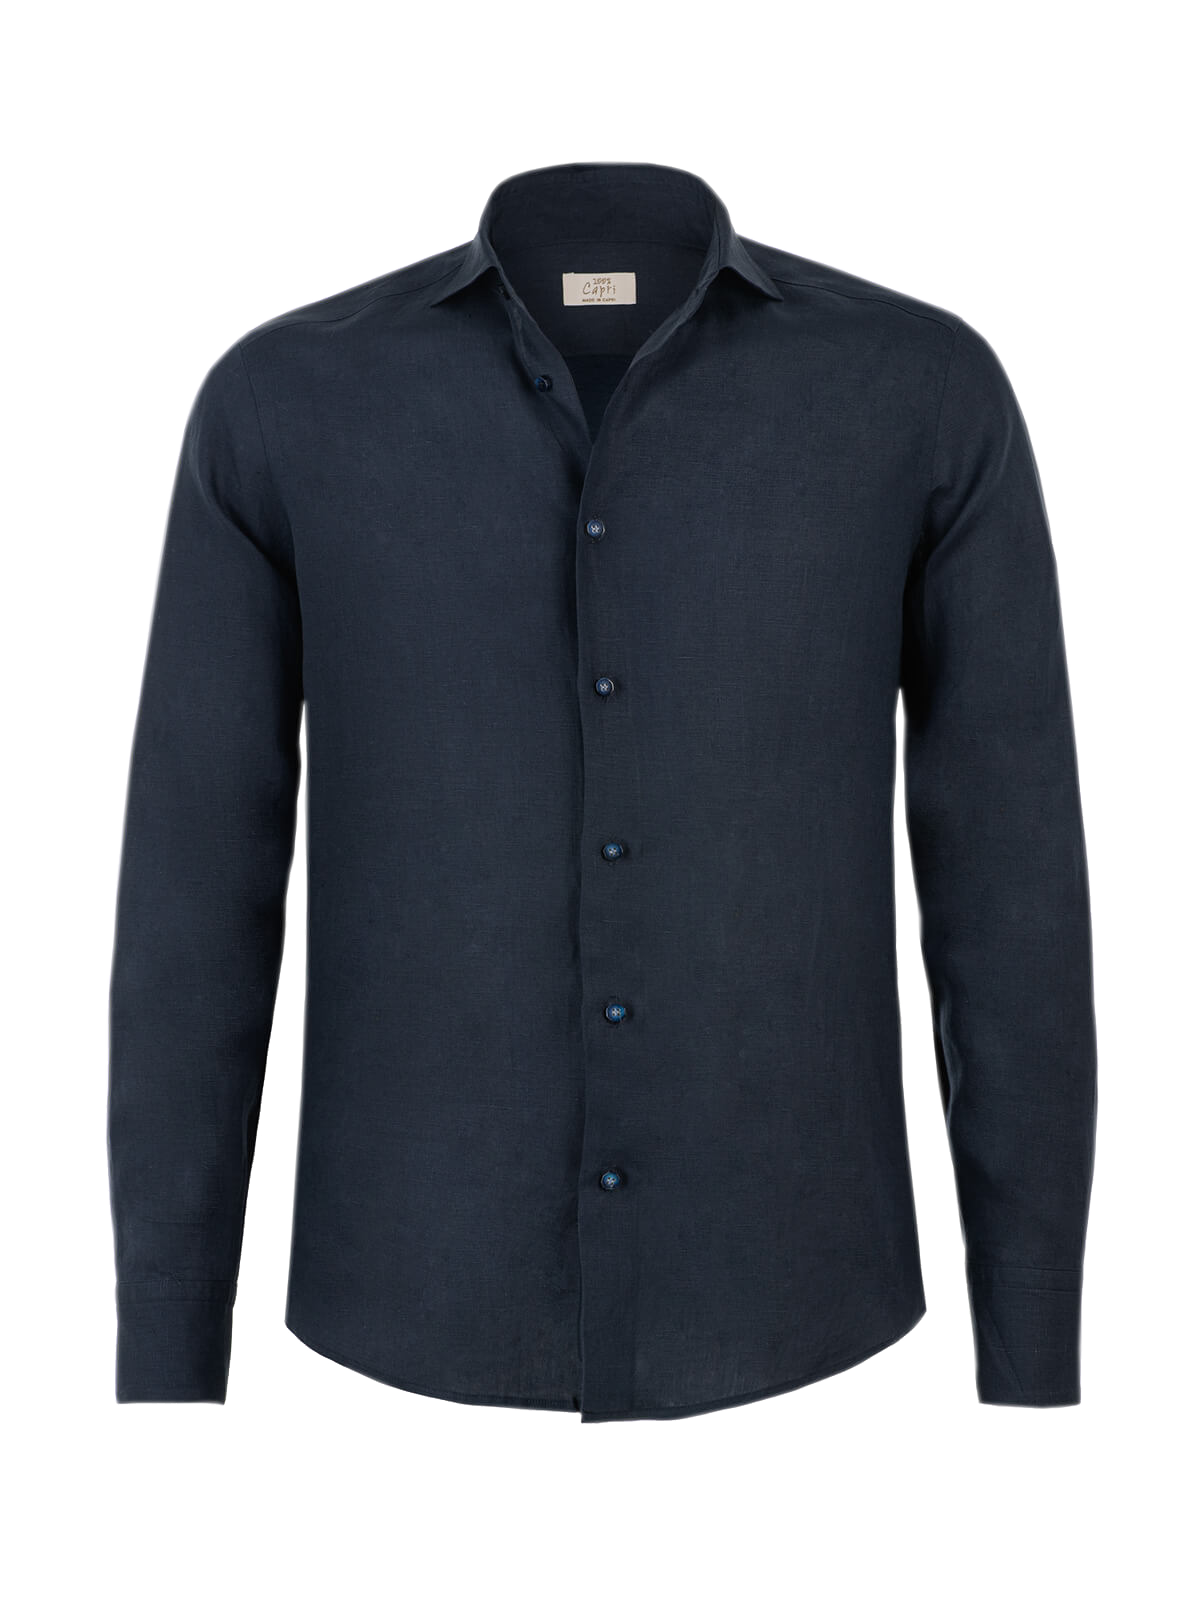 Camicia Mykonos 100% Capri blue linen shirt front